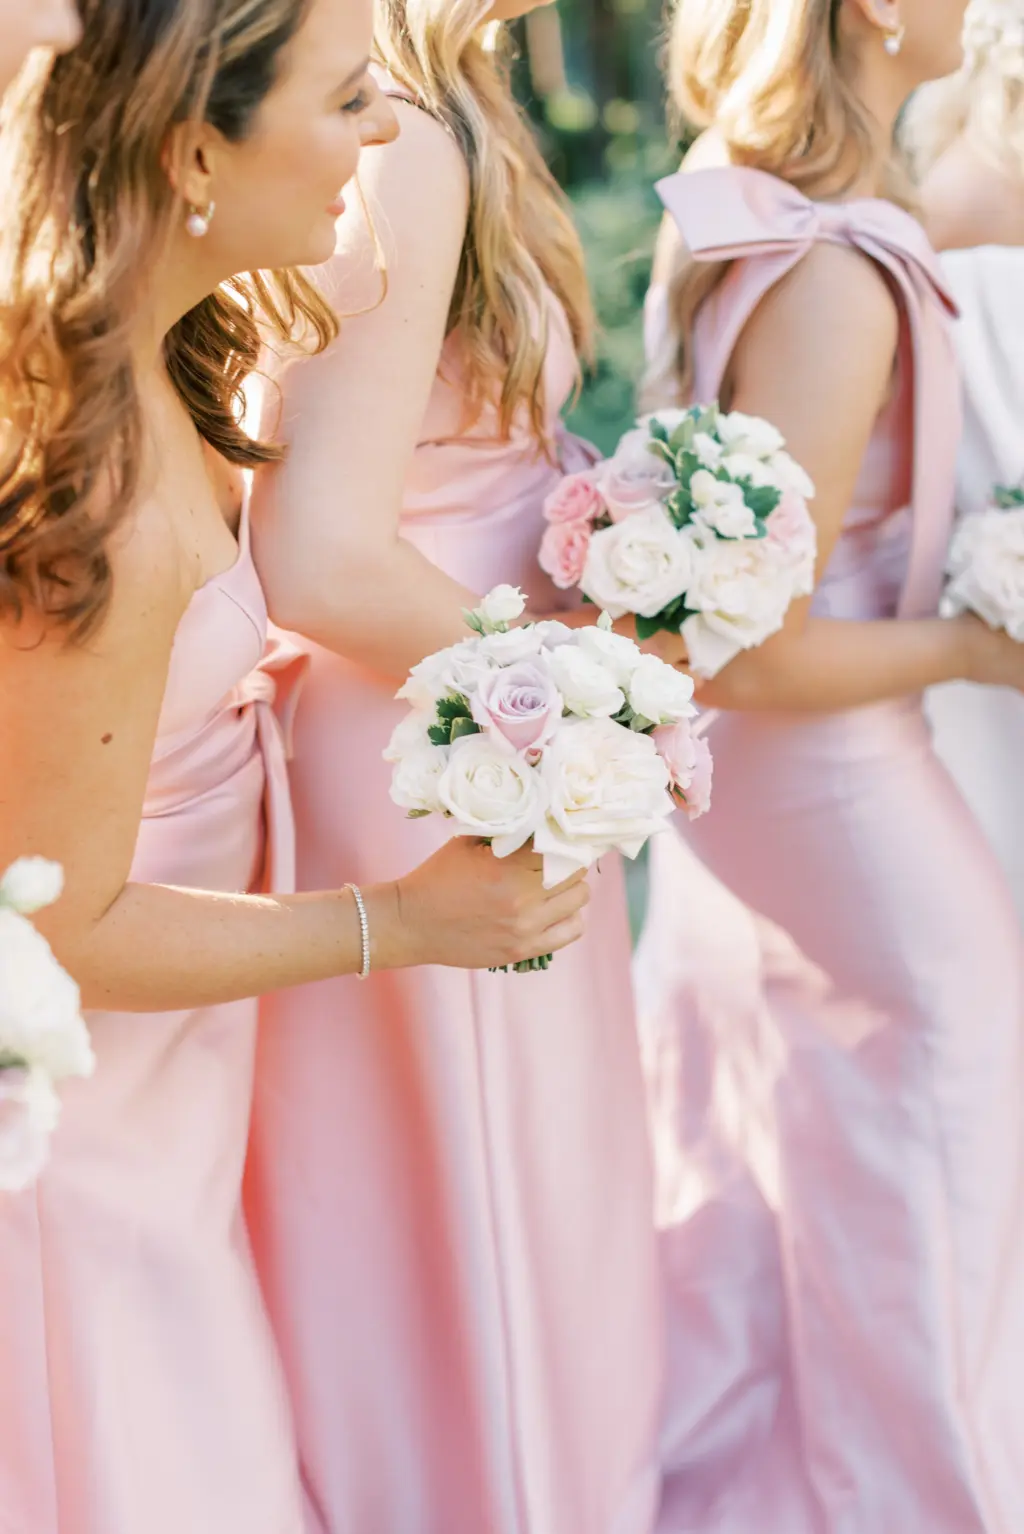 Satin Pink Bridesmaids Dresses with Pink and White Rose Wedding Bouquet Inspiration | | St Petersburg Florist Bruce Wayne Florals